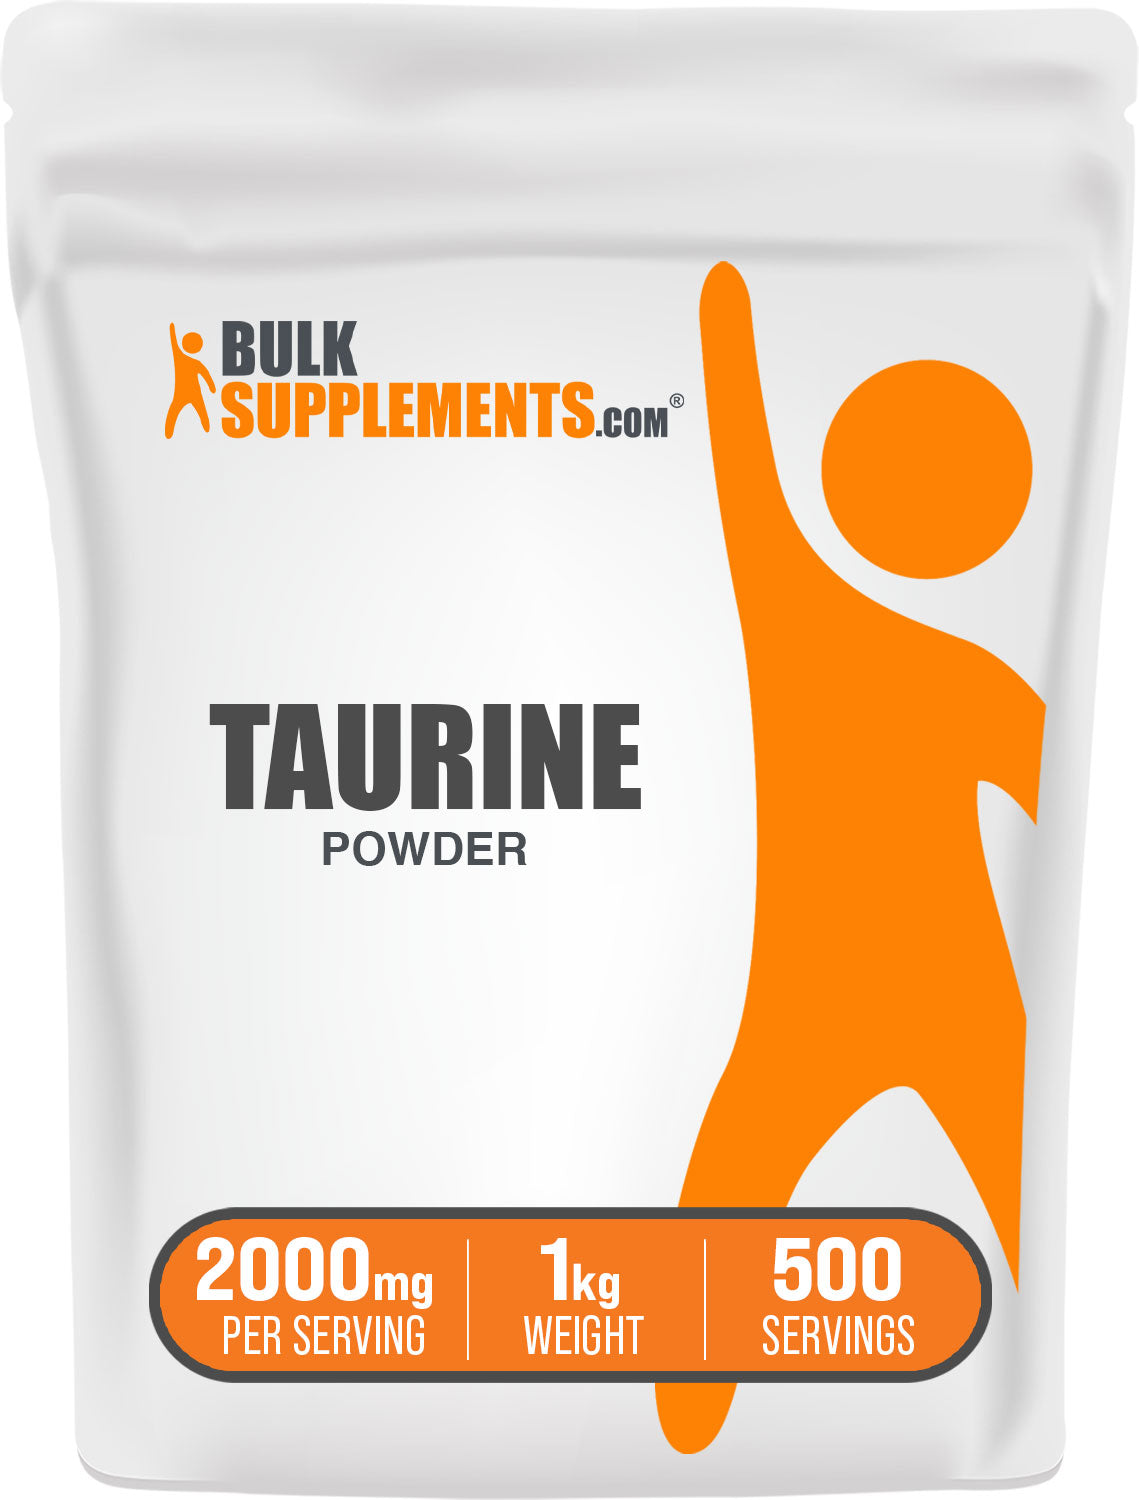 BulkSupplements.com Taurine Powder 1kg bag 